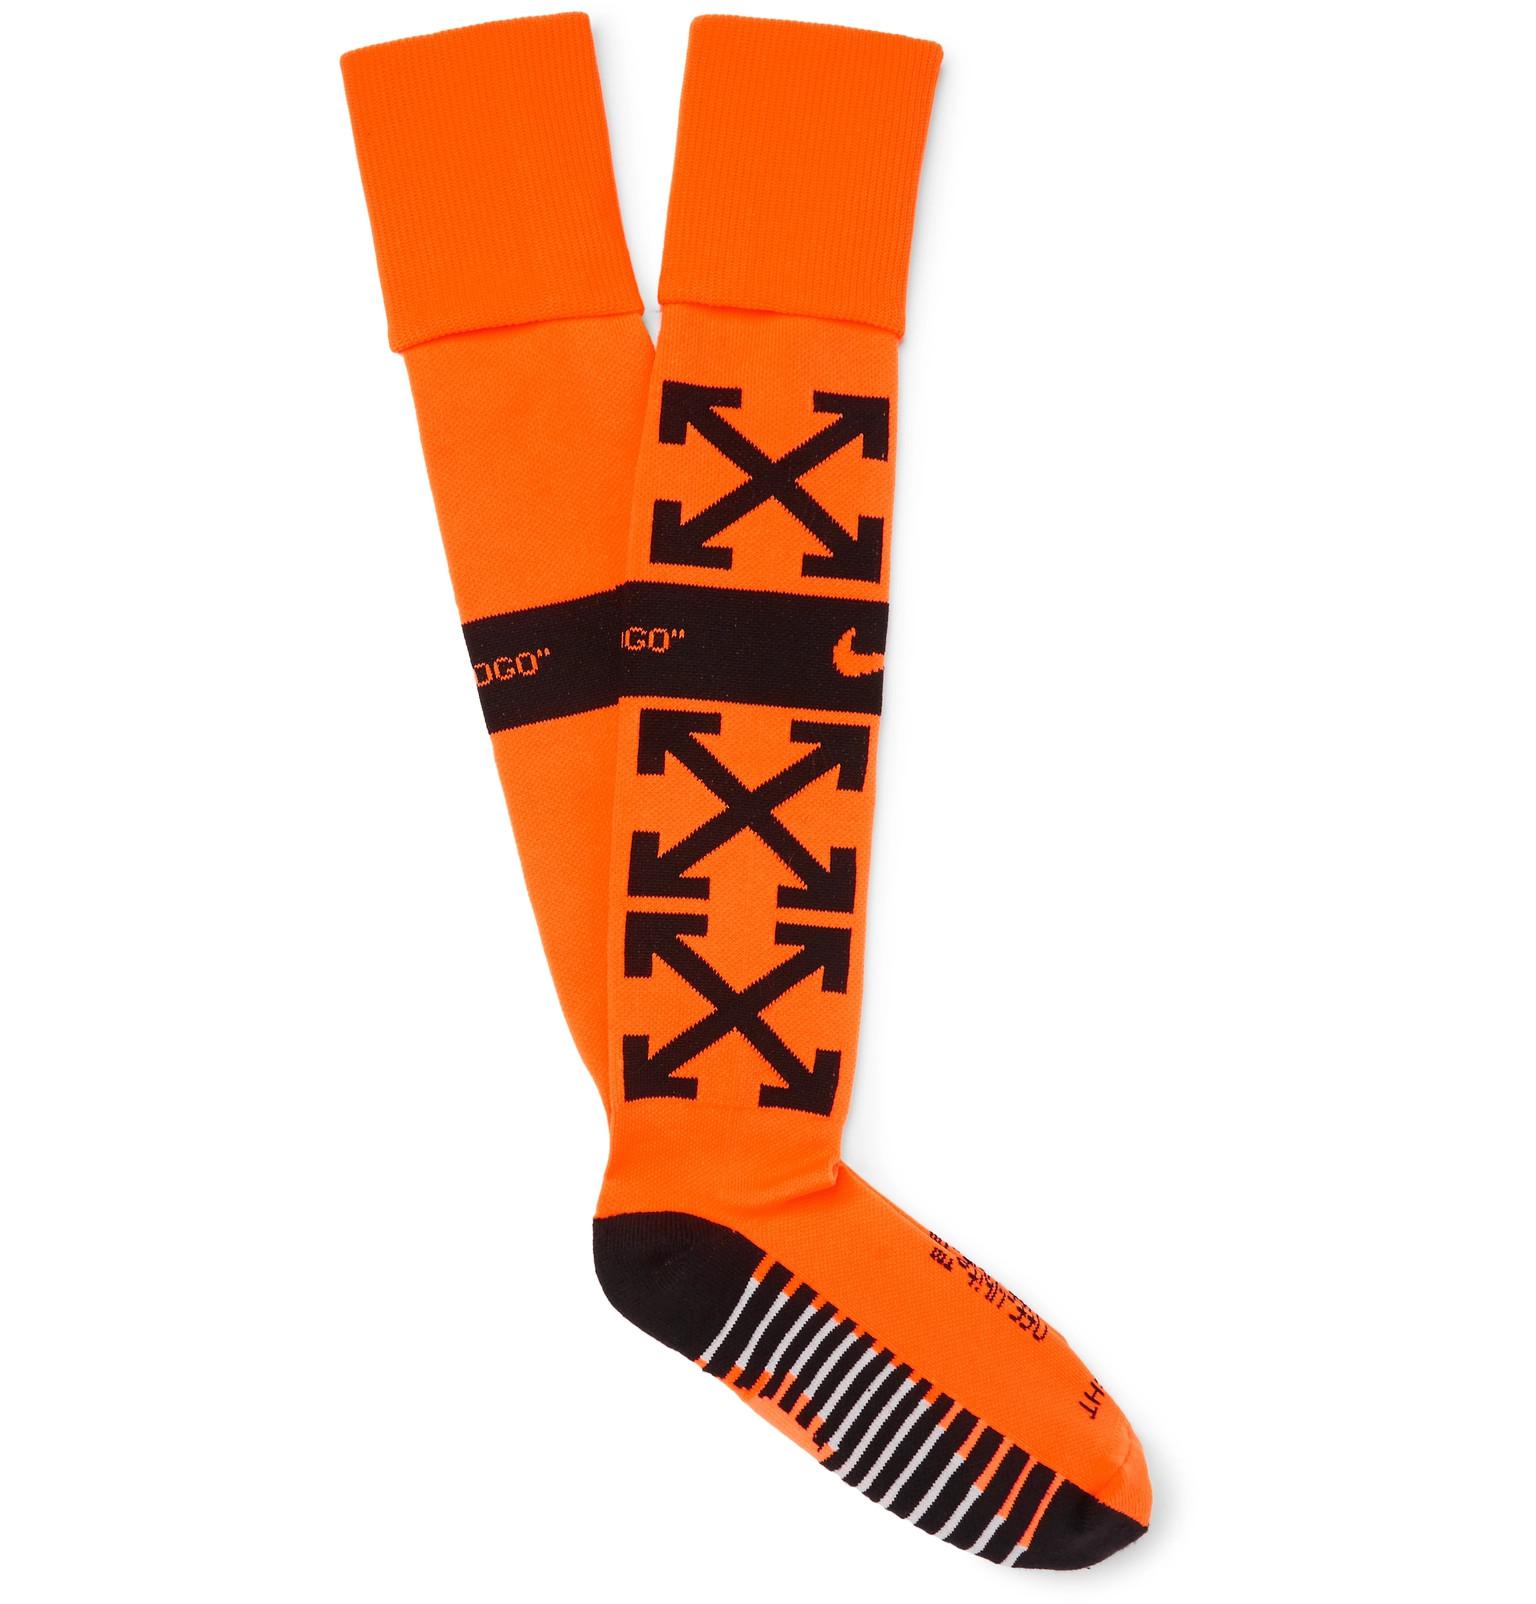 Nike Synthetic Lab + Stretch-knit Socks in Orange for Men - Lyst